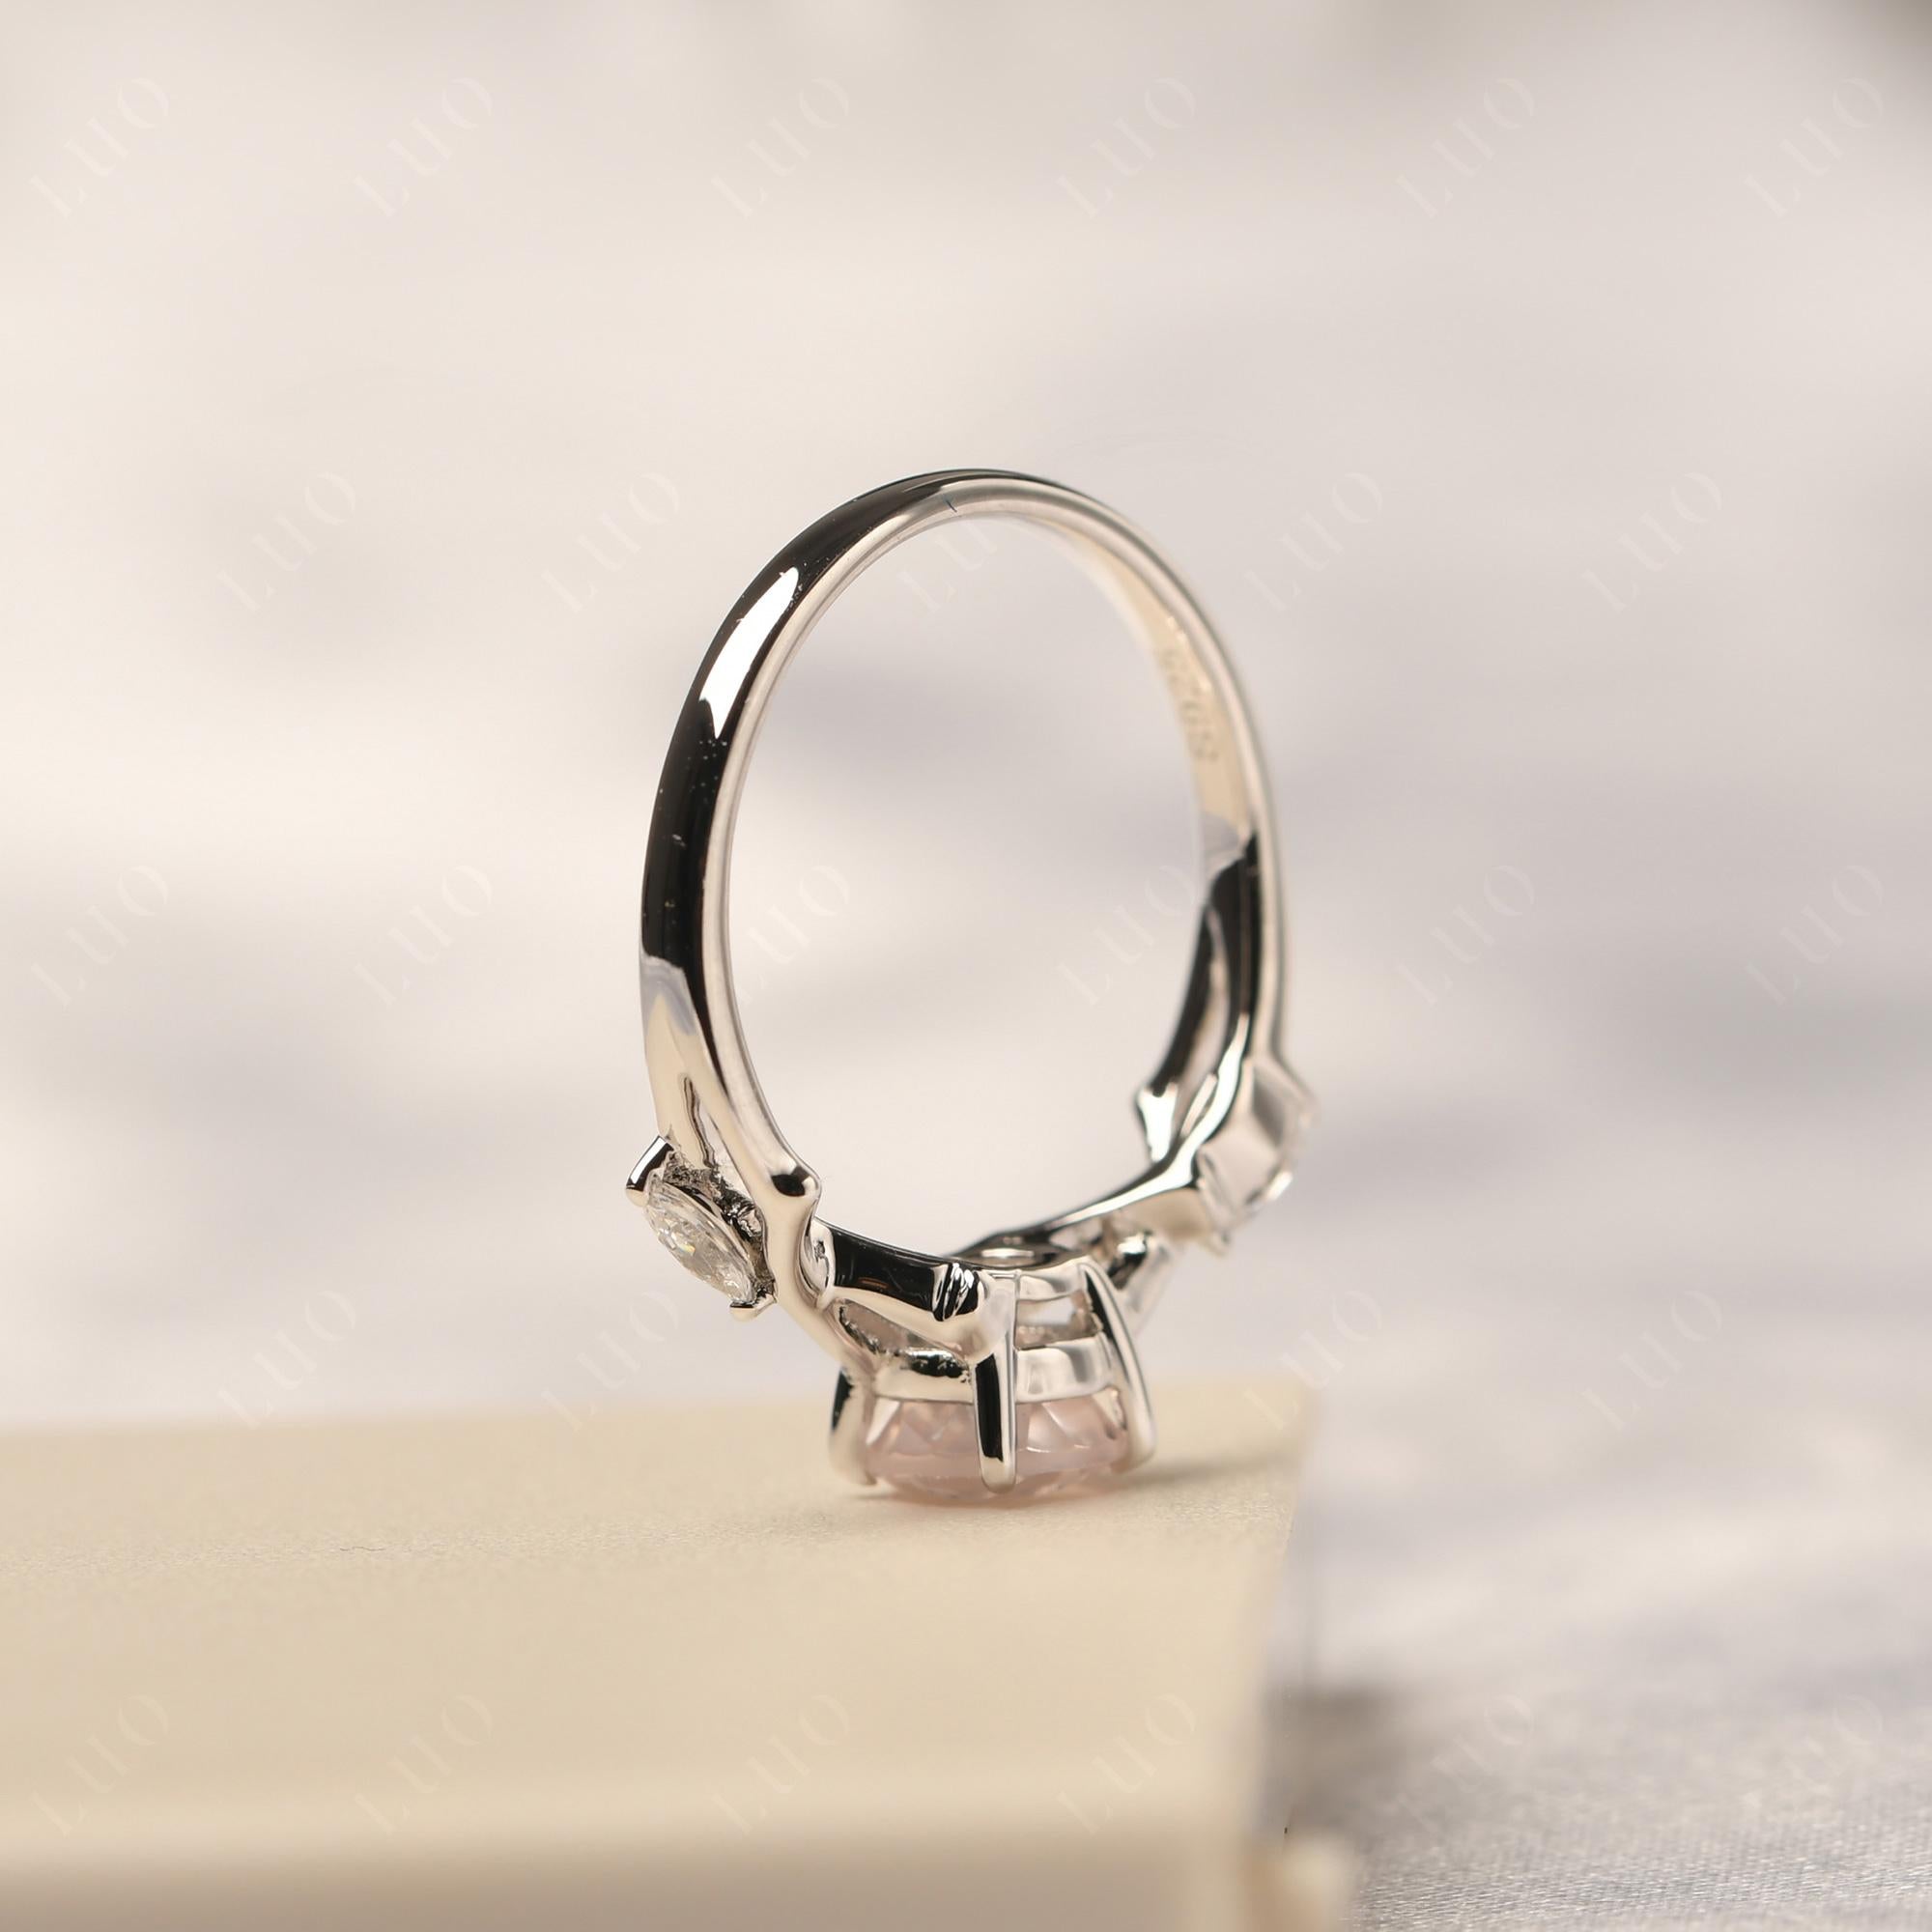 Twig Rose Quartz Engagement Ring - LUO Jewelry